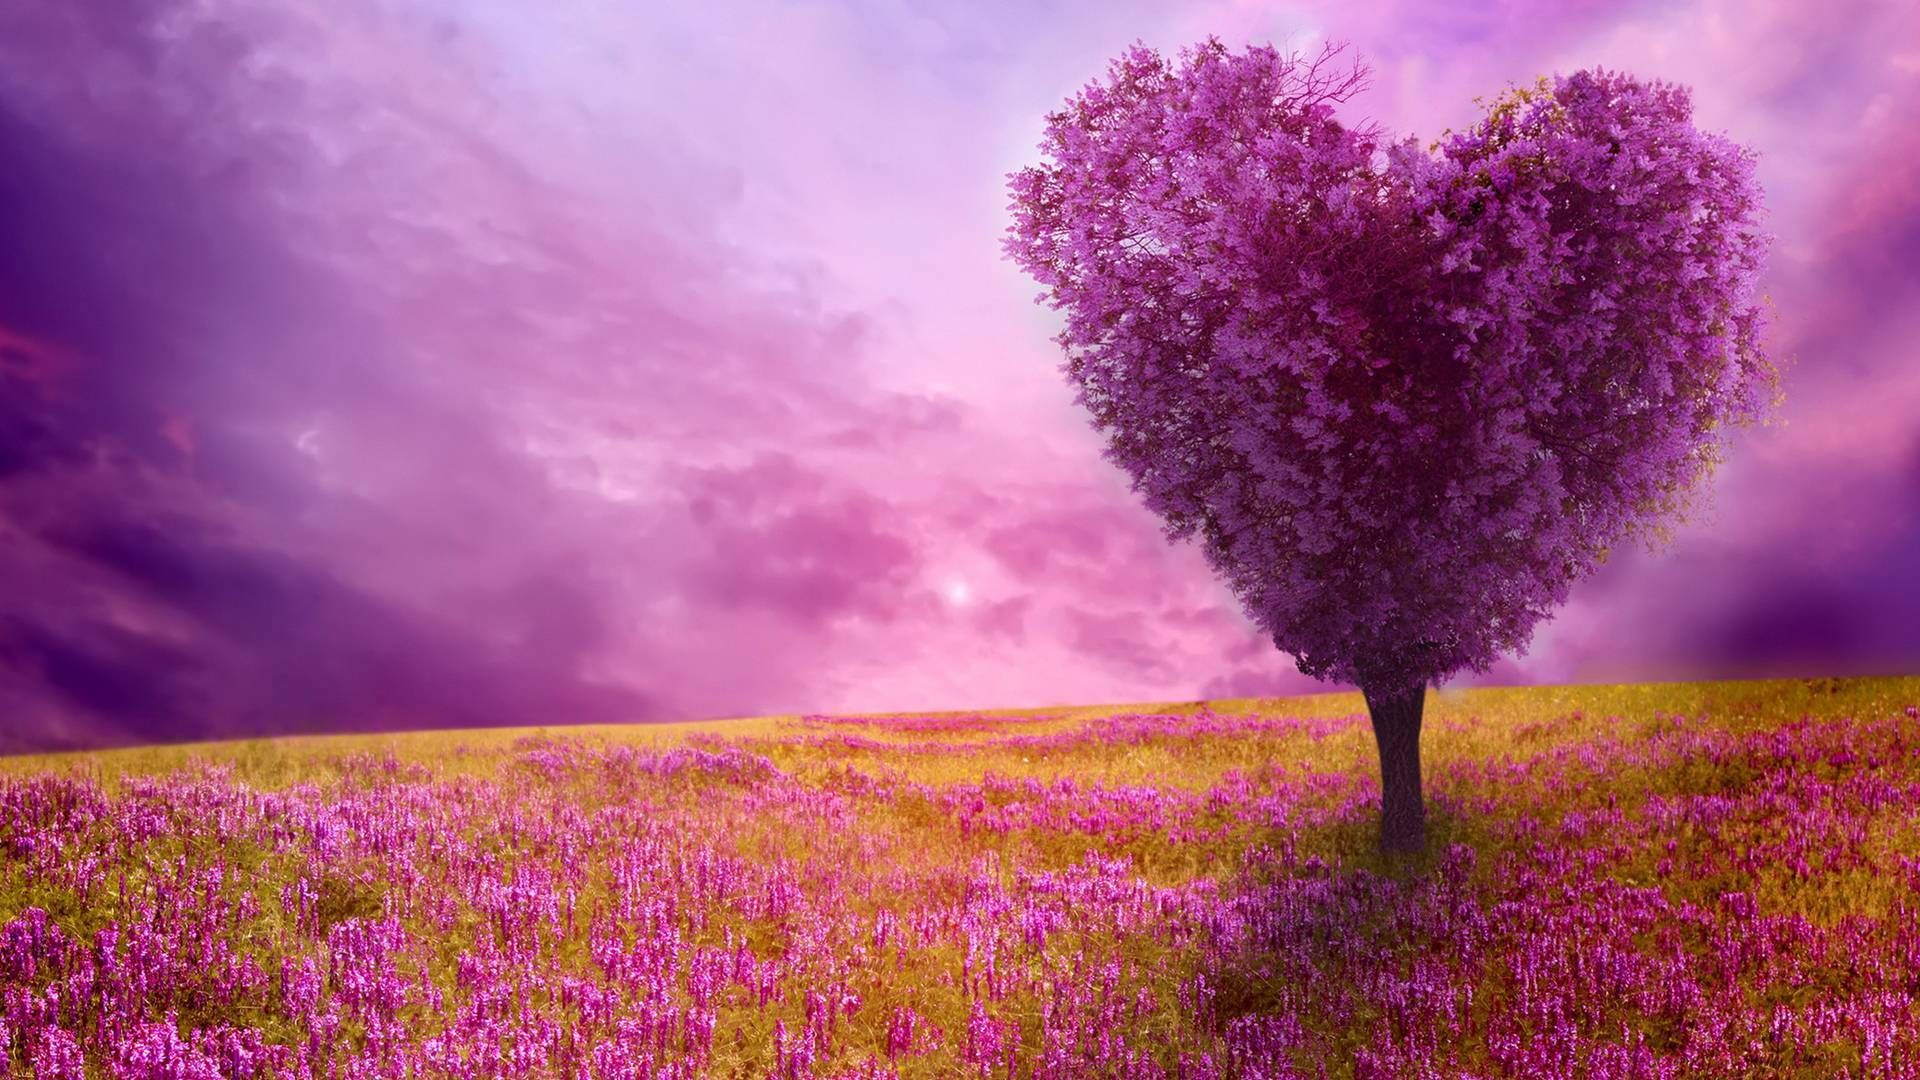 Purple Heart Spring Landscape Desktop Wallpaper is a high